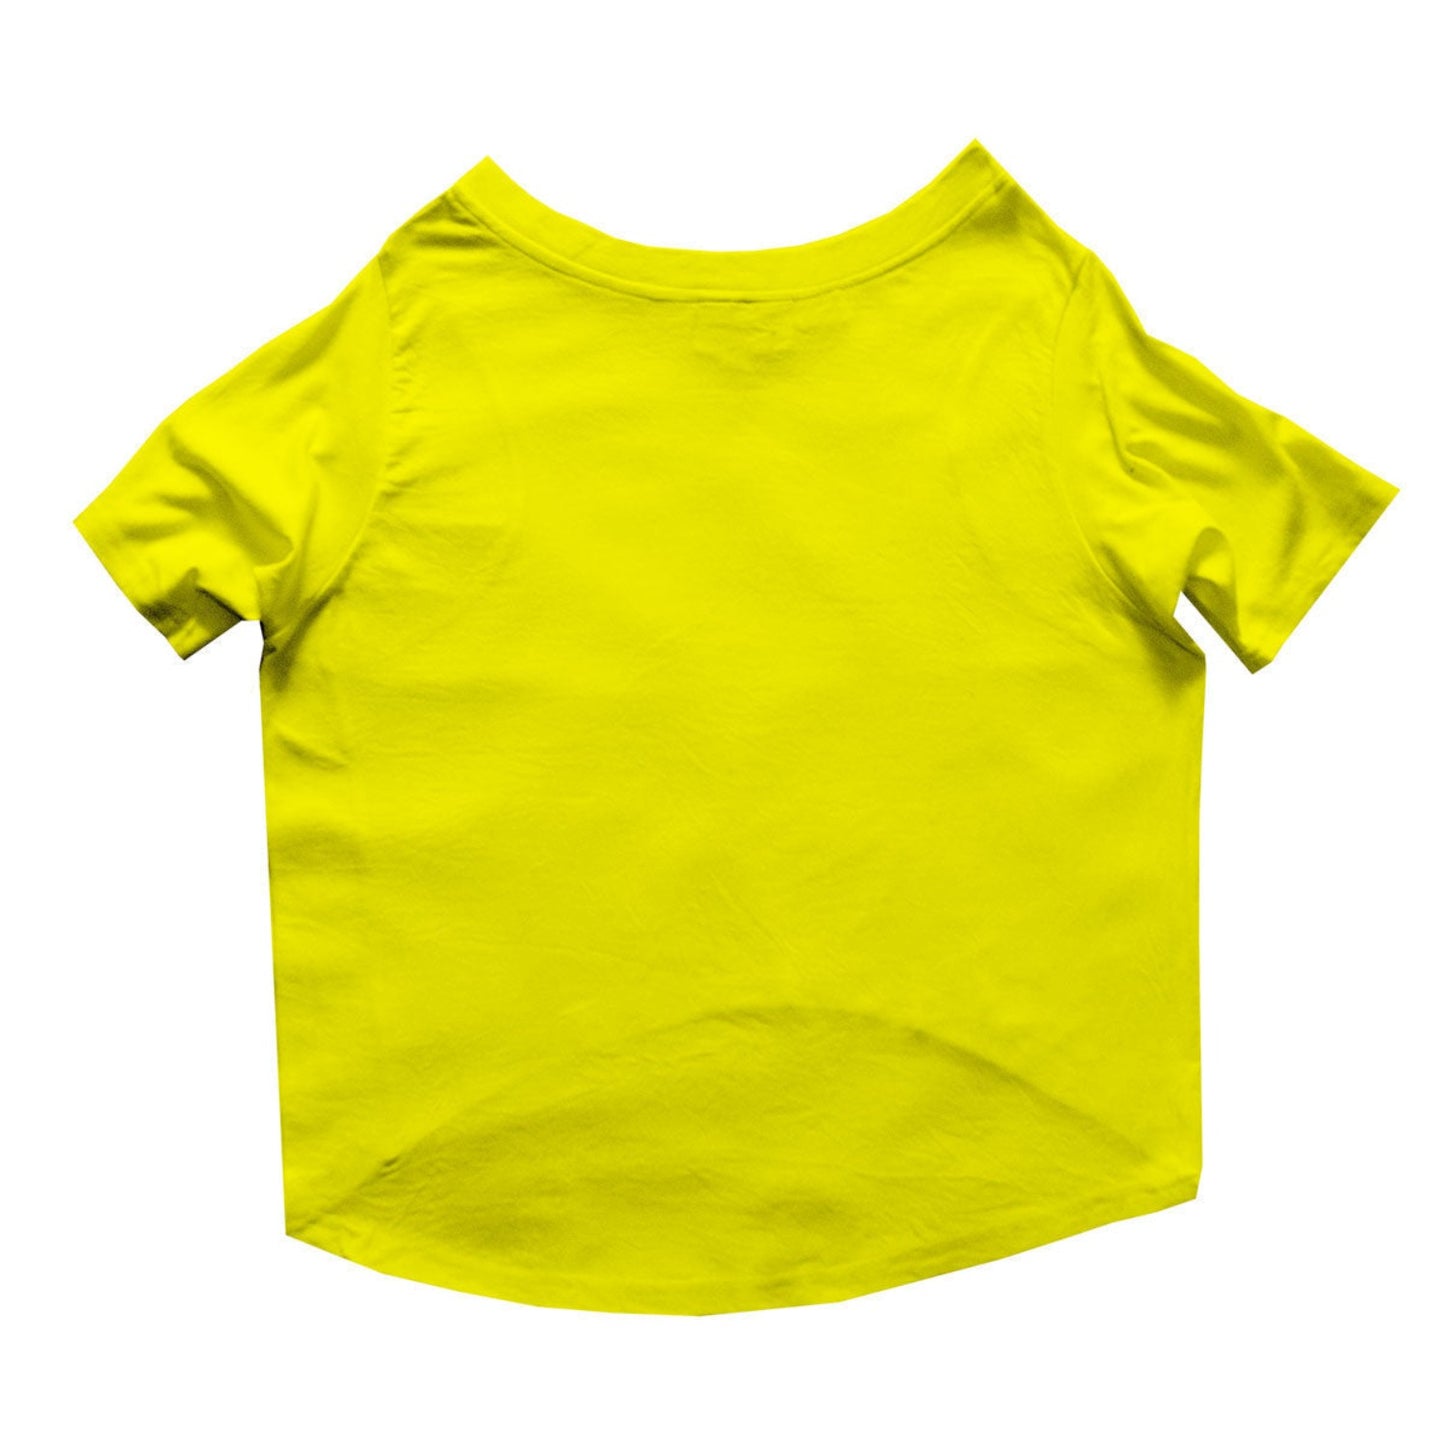 Ruse / Yellow Ruse Basic Crew Neck "Favourite Brother" Printed Half Sleeves Dog Tee16